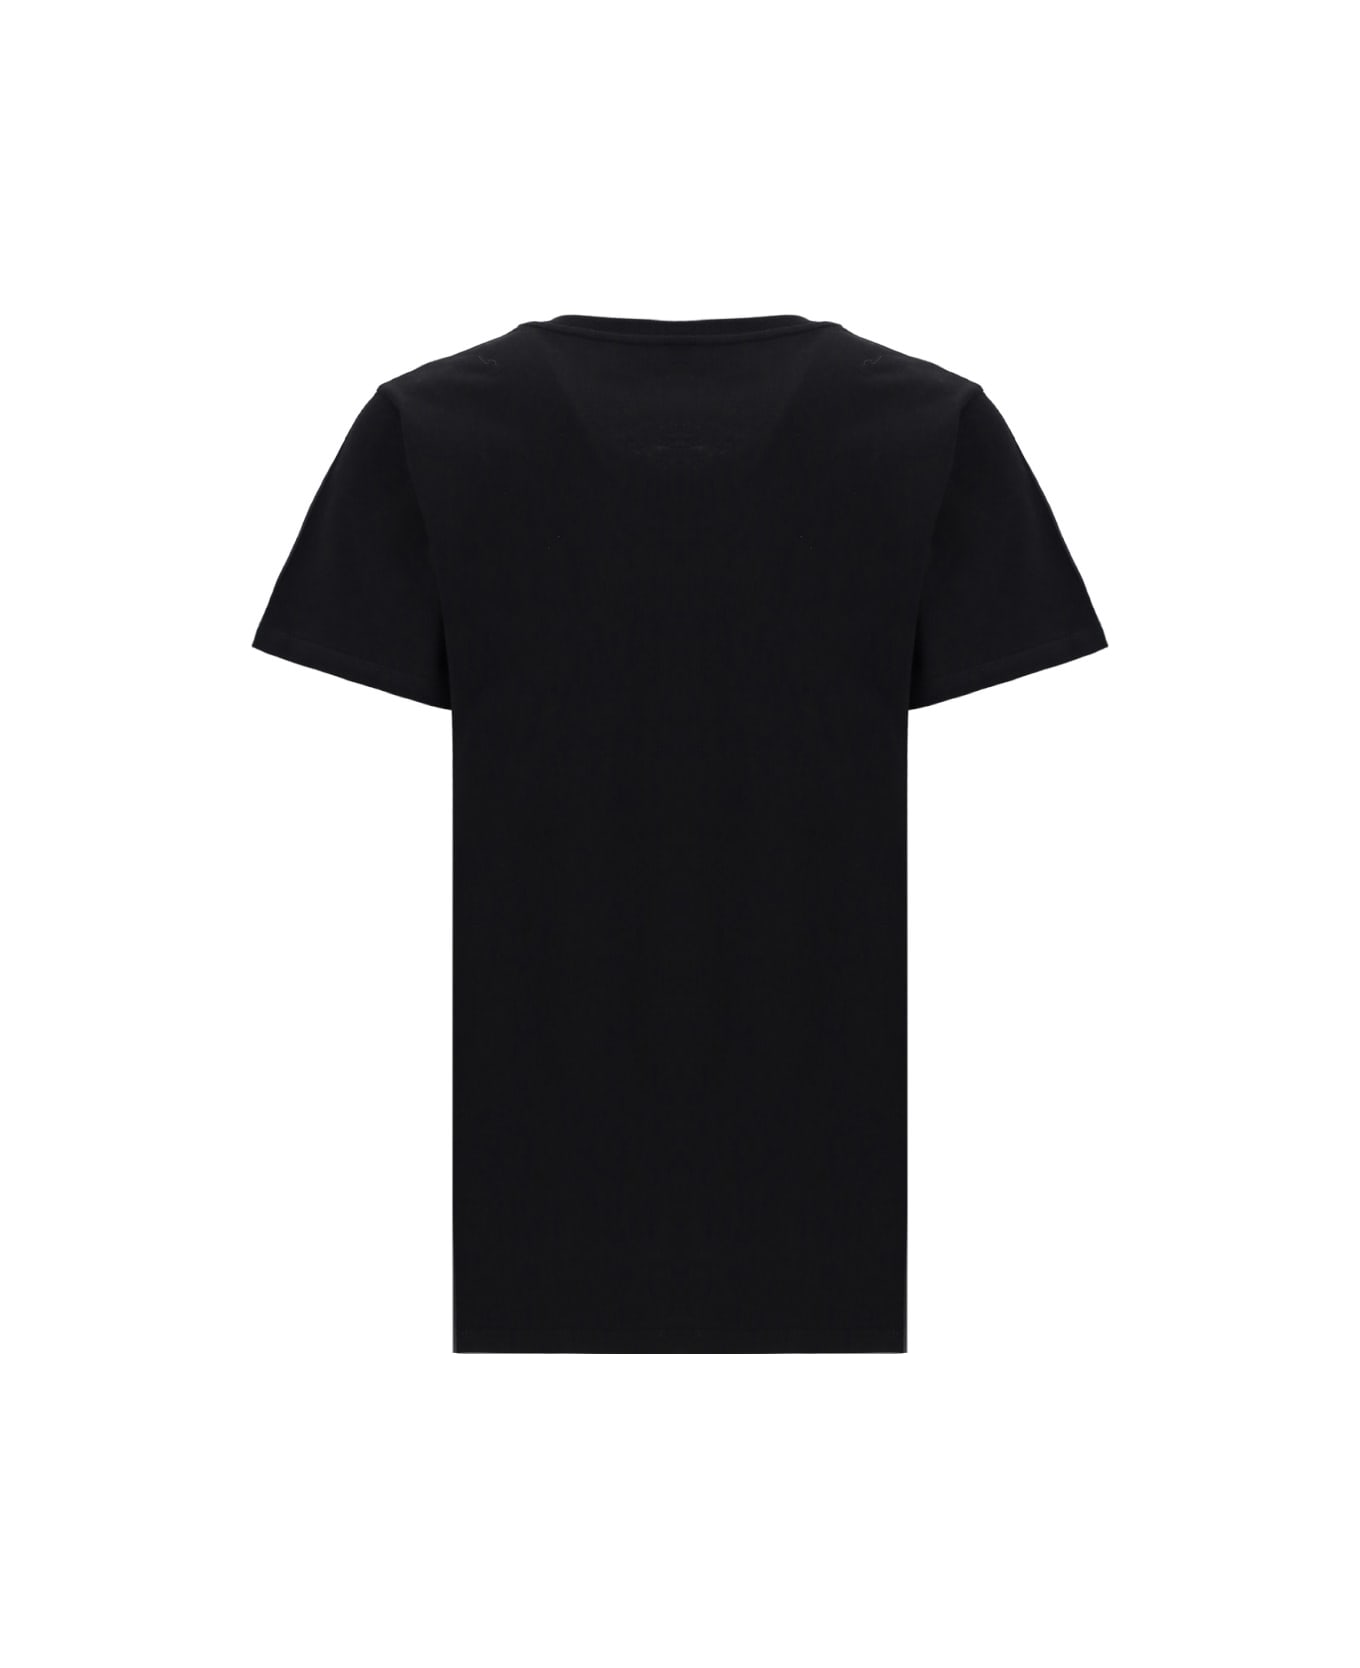 Alexander McQueen T-shirt - Black/white